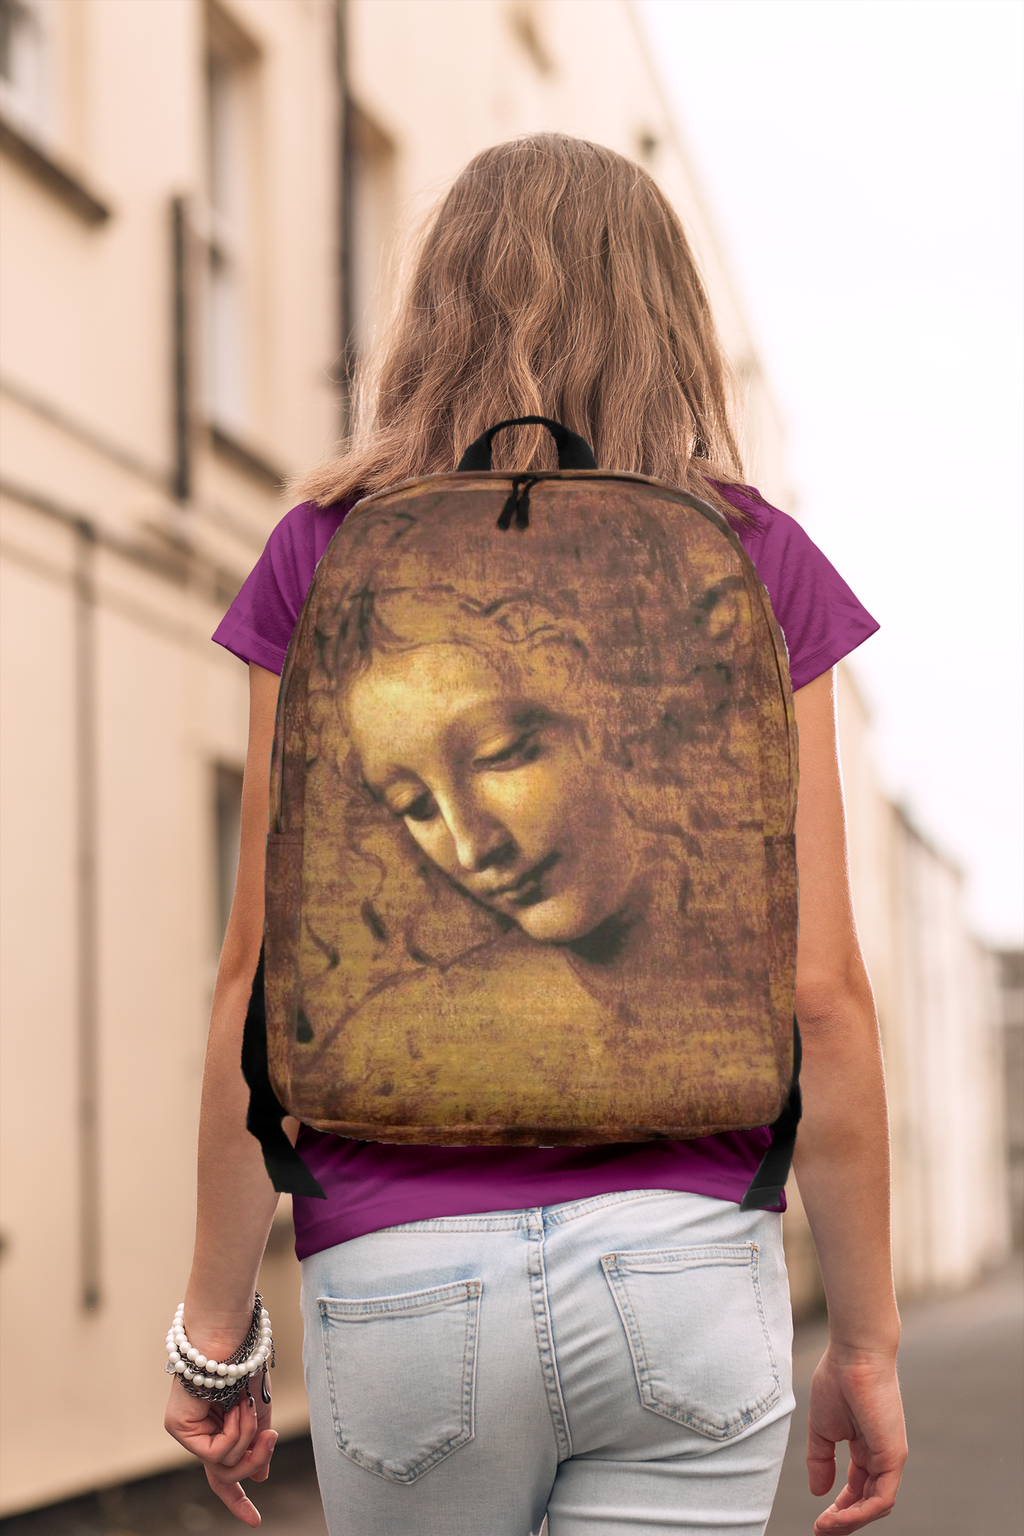 Lady of the Disheveled Hair by da Vinci Minimalist Backpack